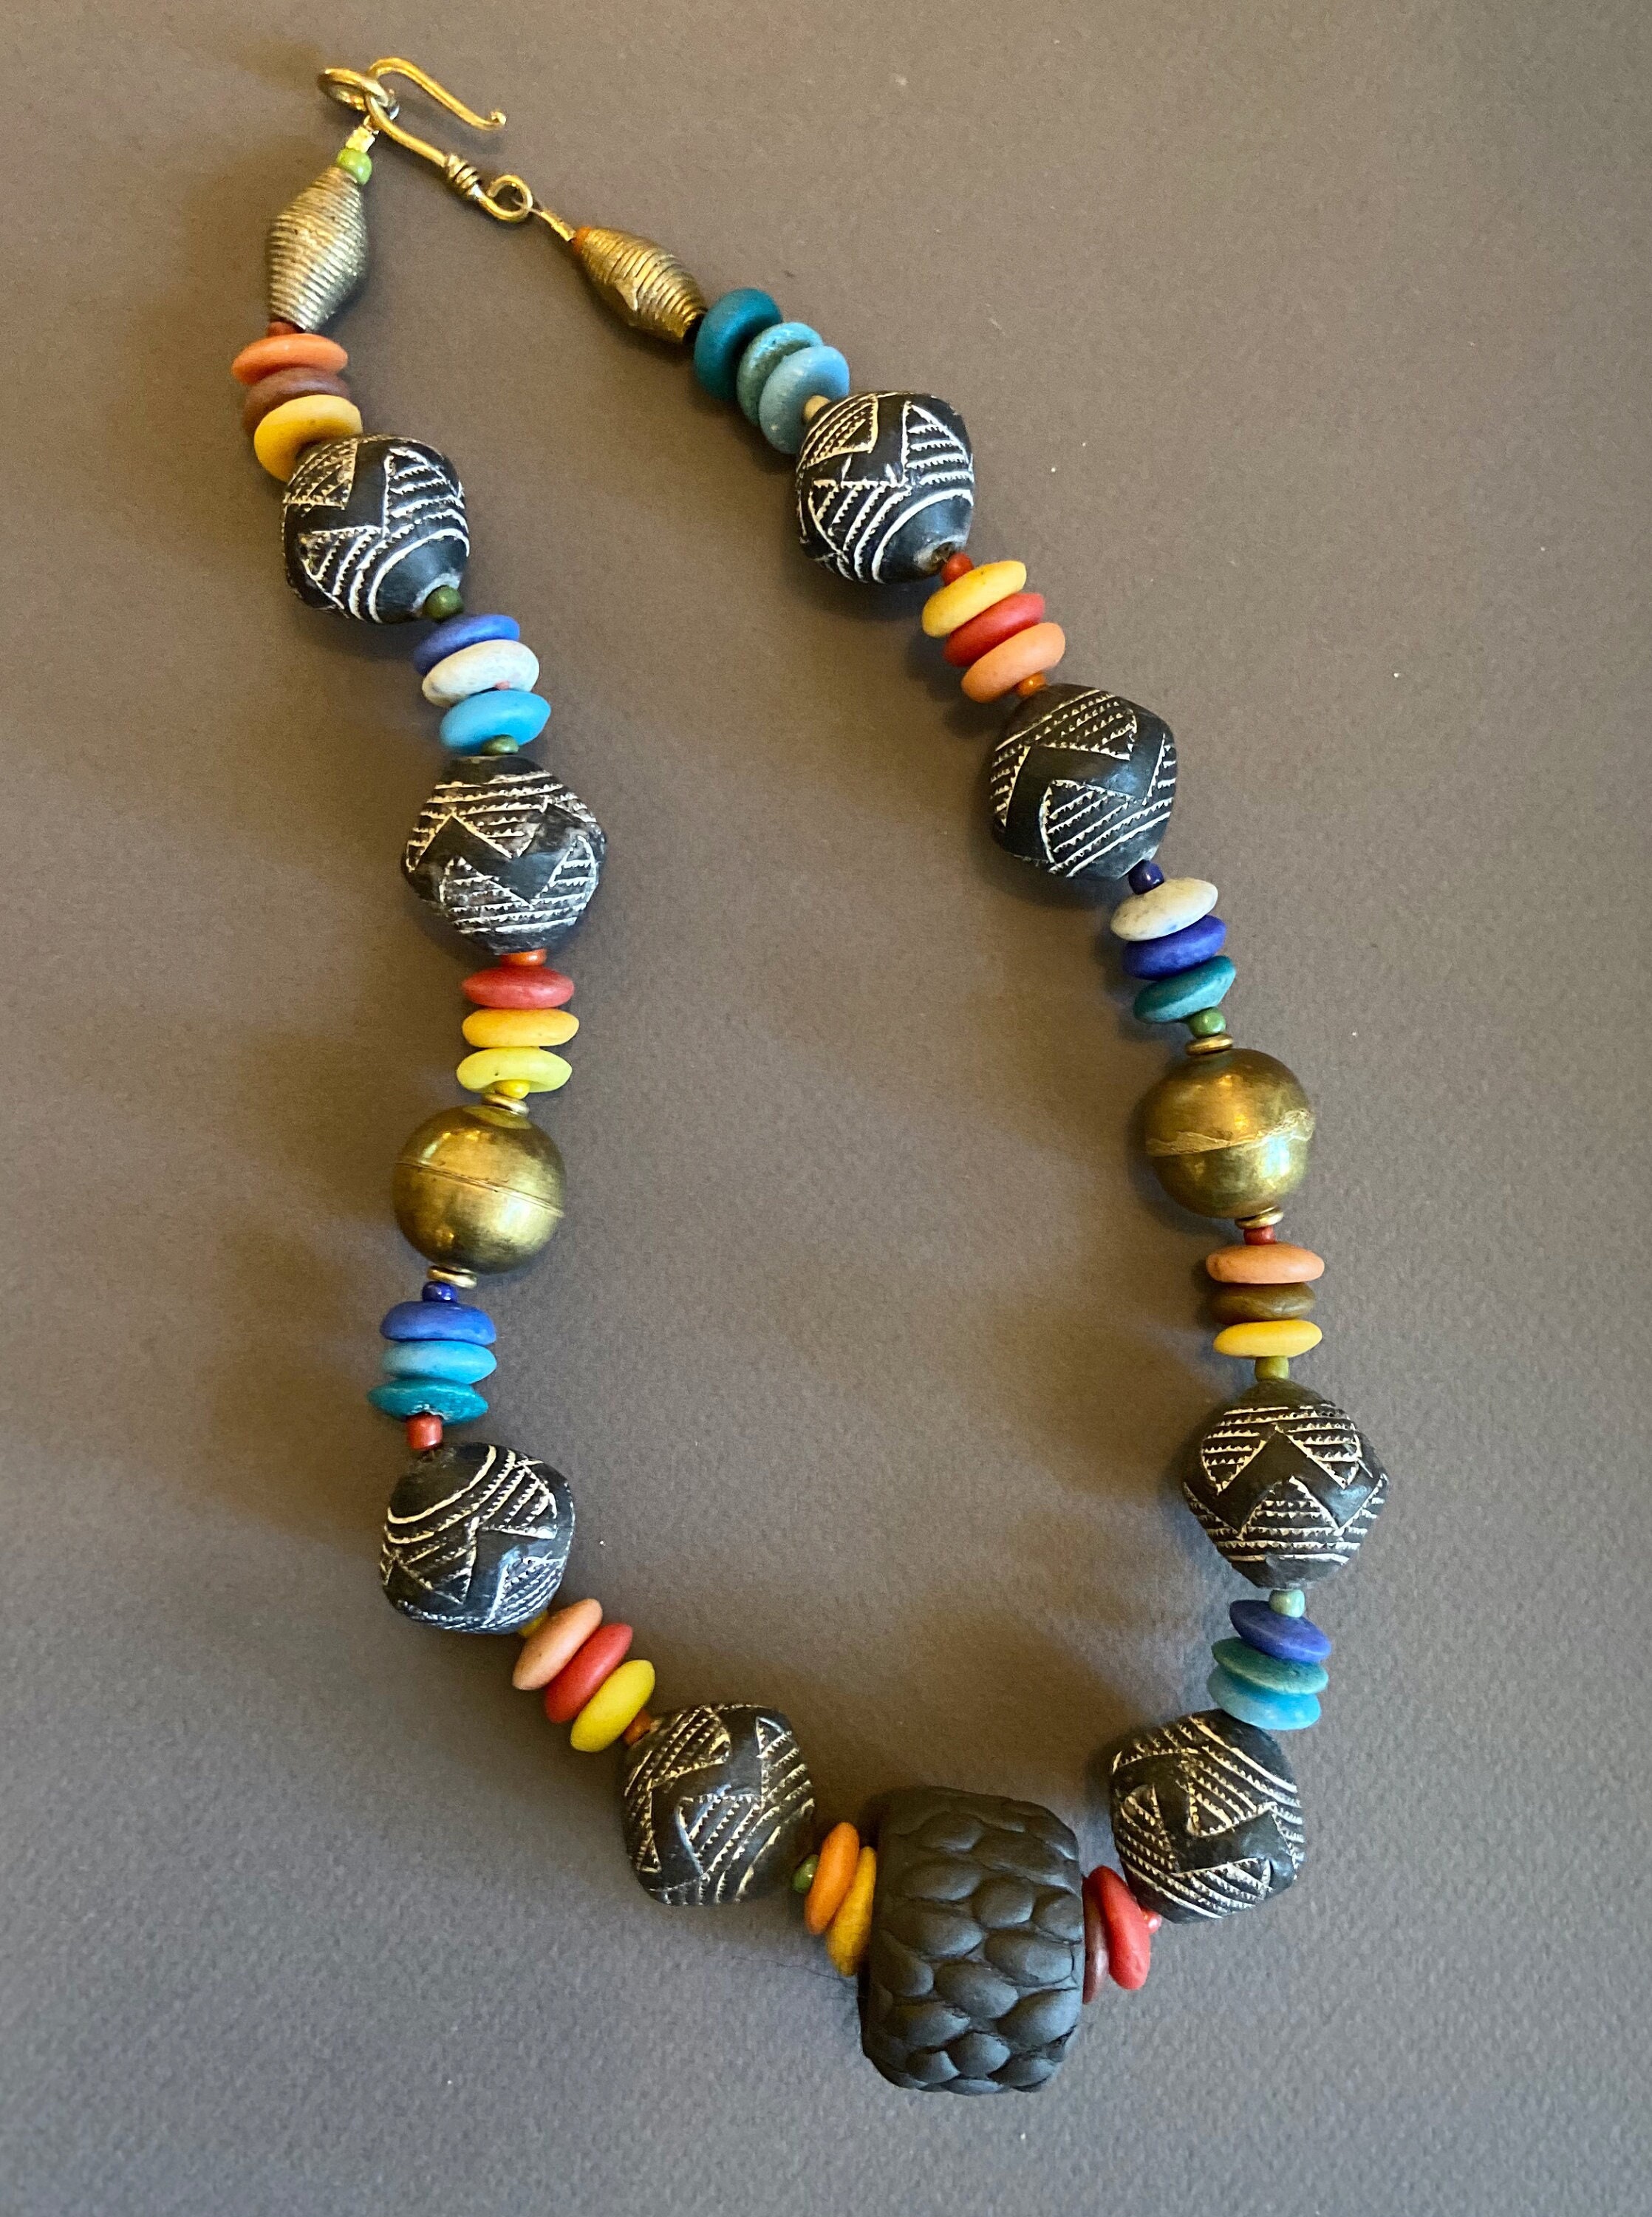 40 Black Terracotta Mali Clay Beads 14mm Round African Beads Terra-cotta  Beads Jewelry Supplies Made in Mali MALI-RND-BLK-257 